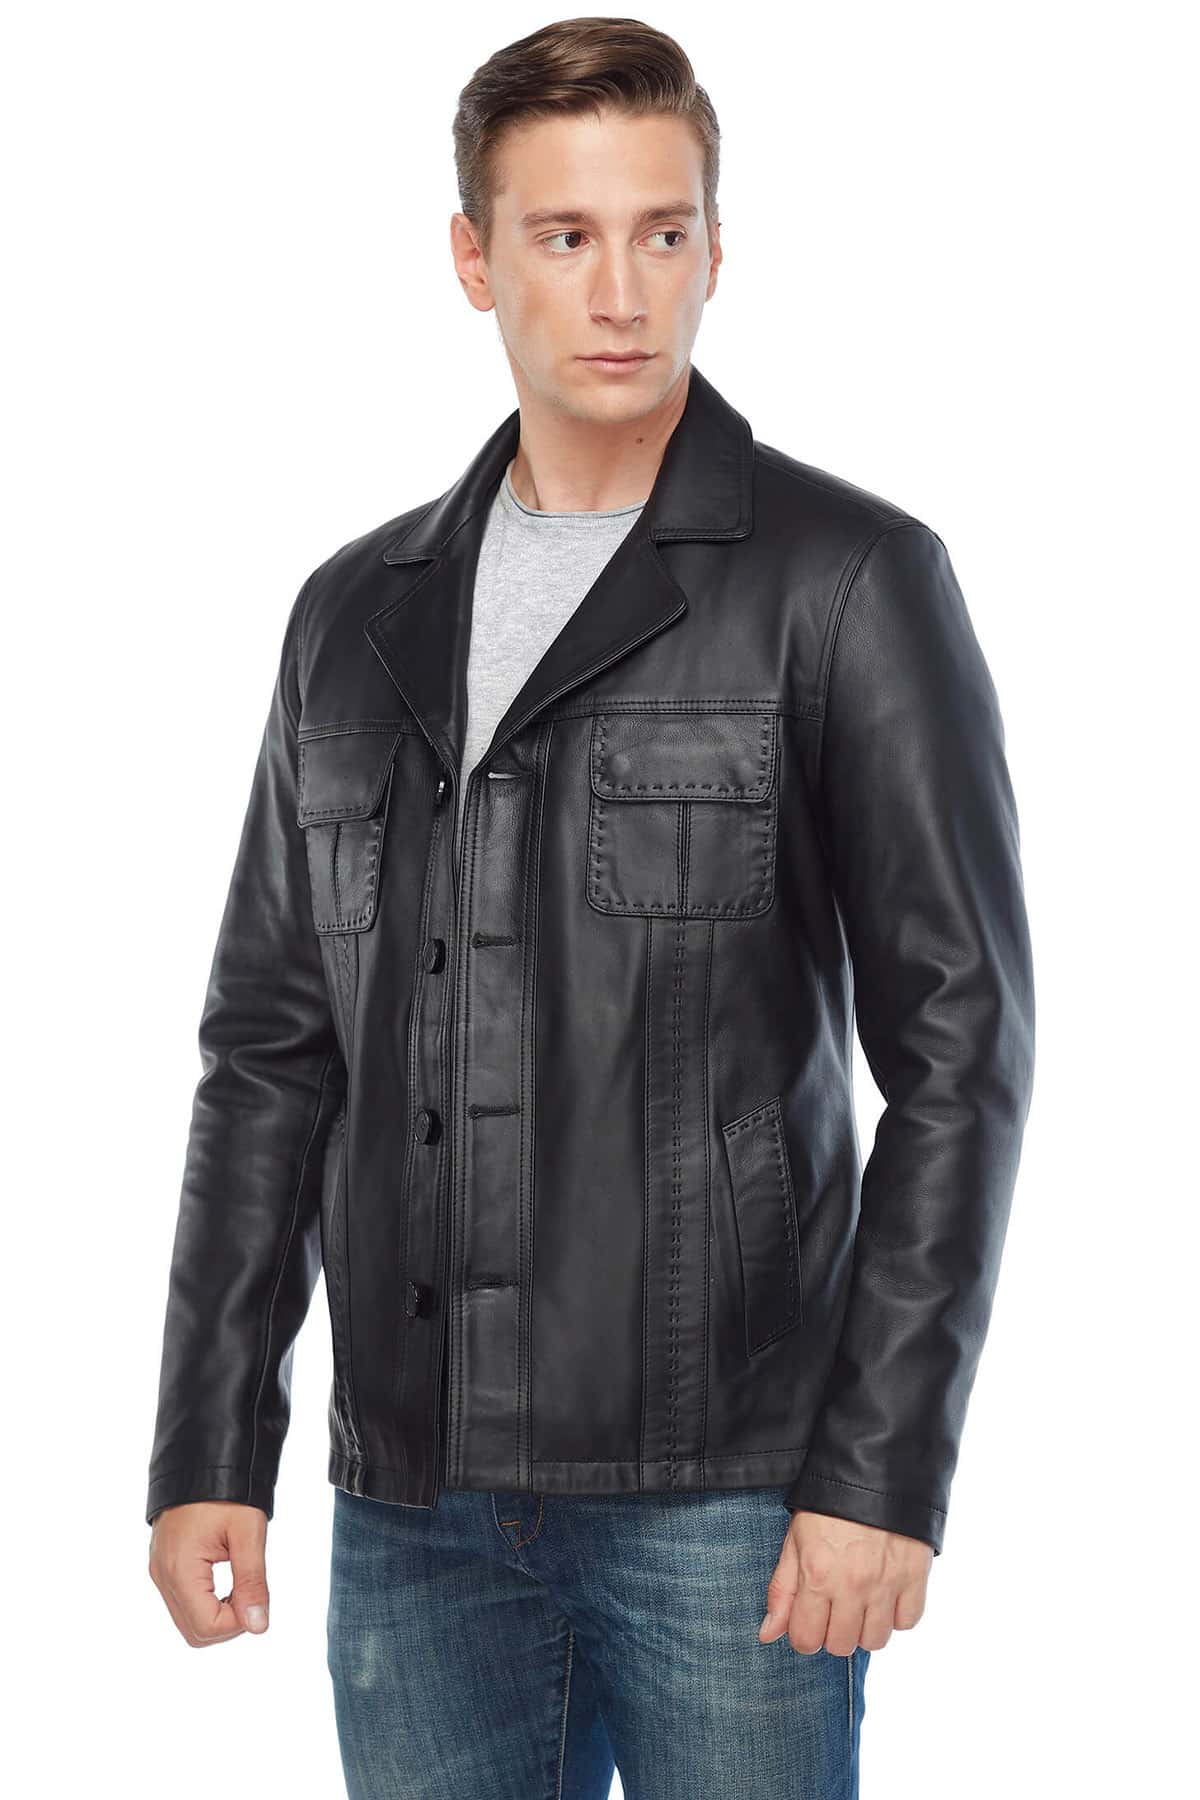 Charley Speed Men’s Leather Coat Black Side